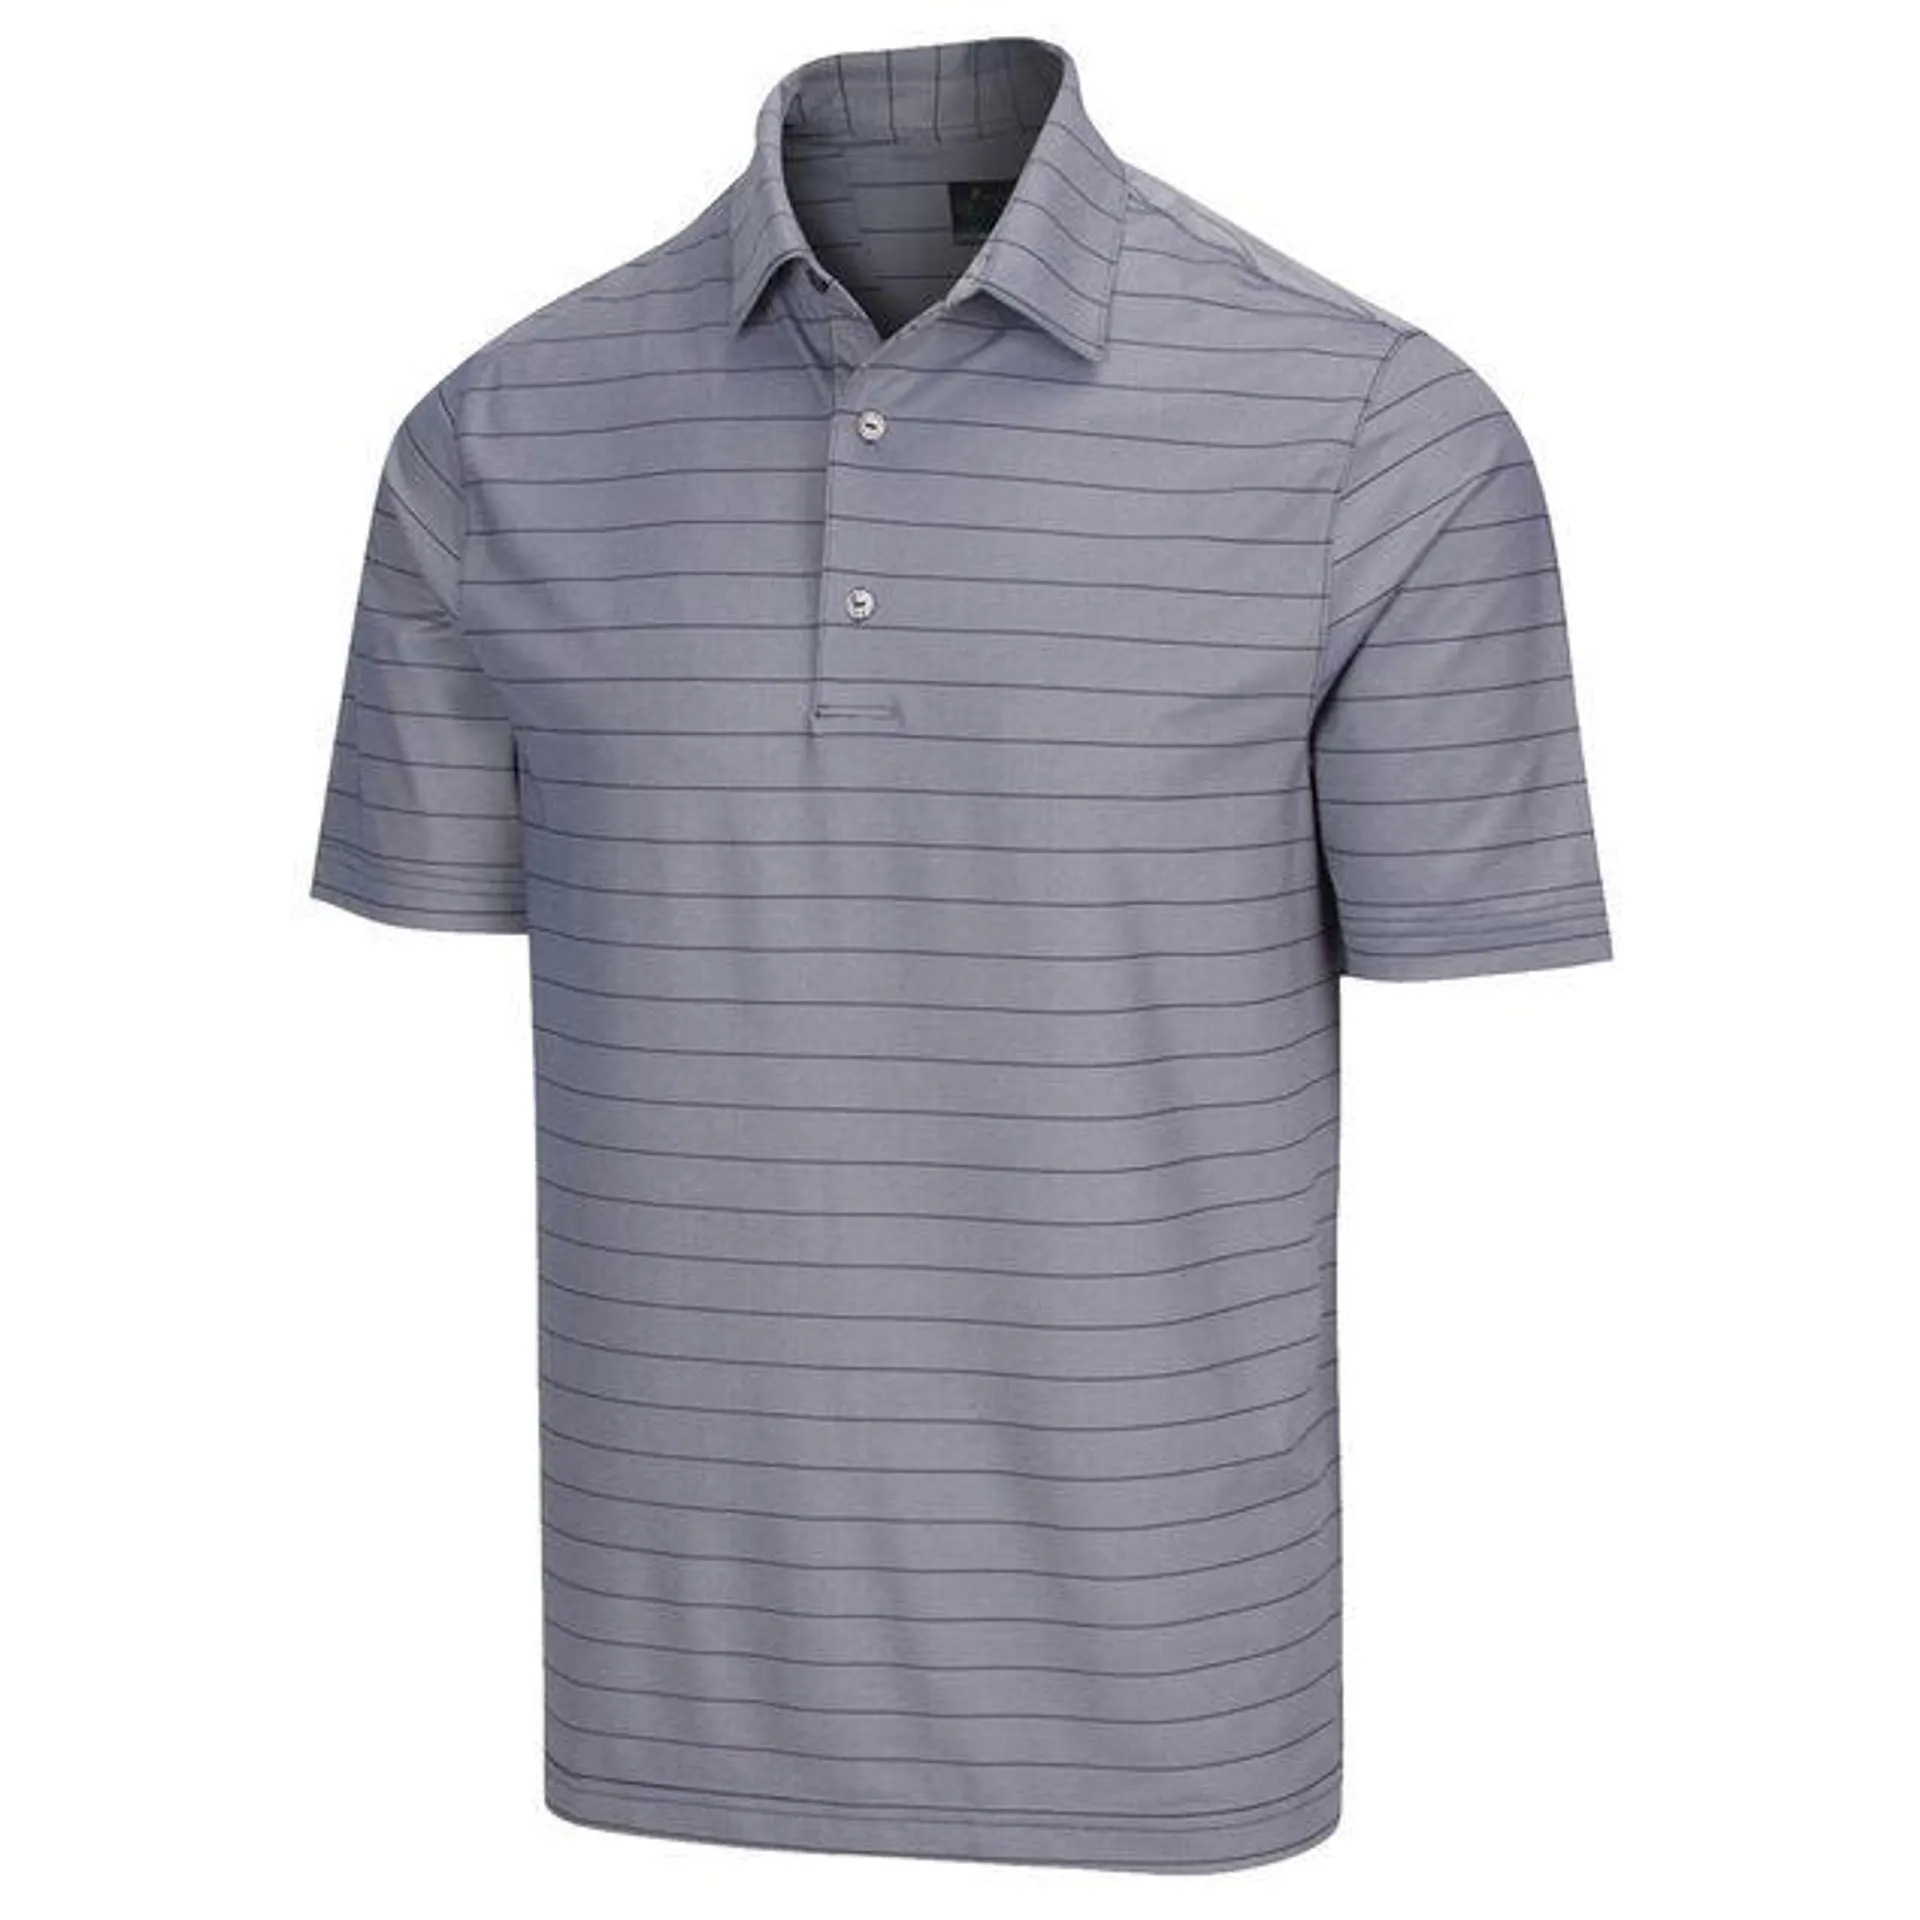 Greg Norman Men's Freedom Micro Pique Stripe UPF Golf Polo Shirt